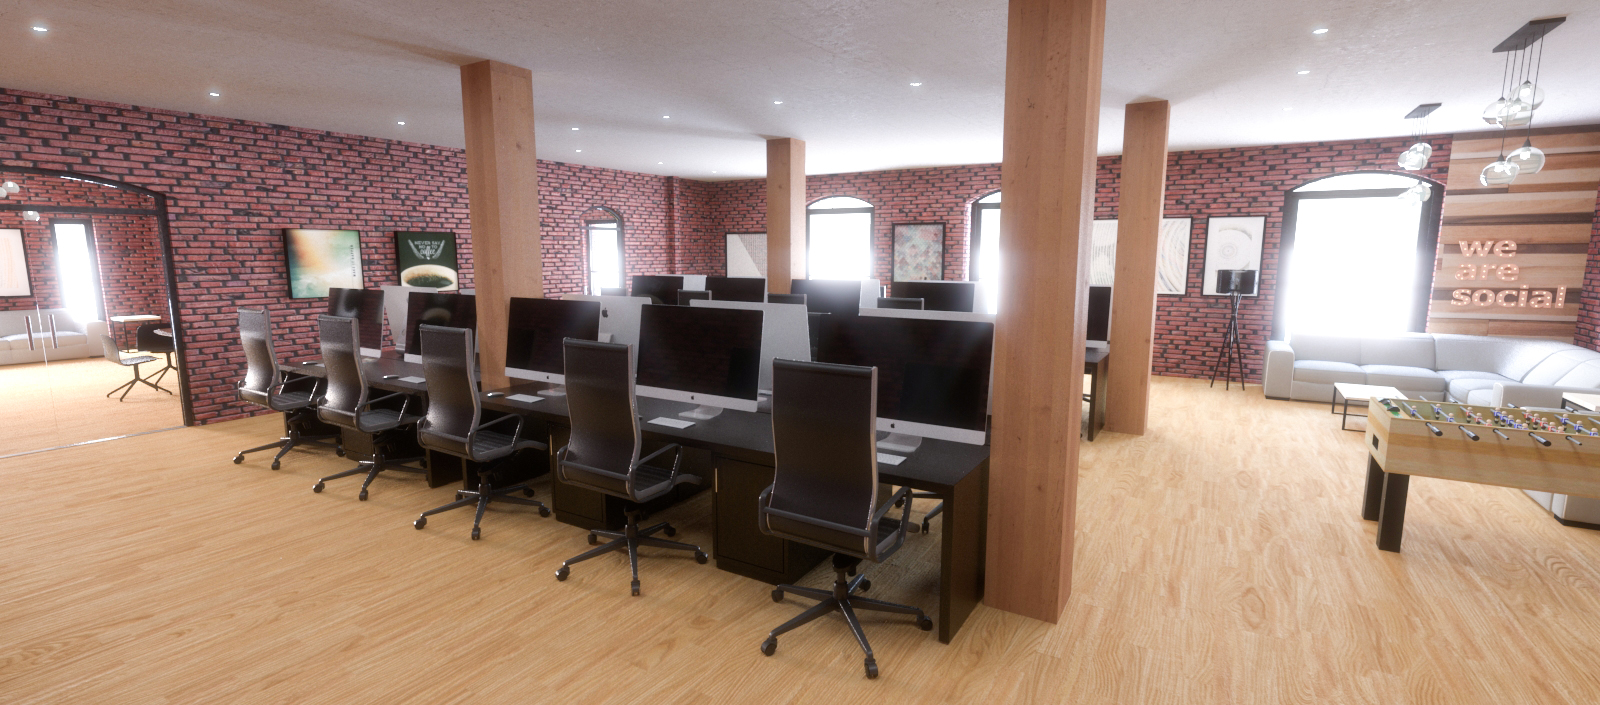 Modern office interior - 3d rendering